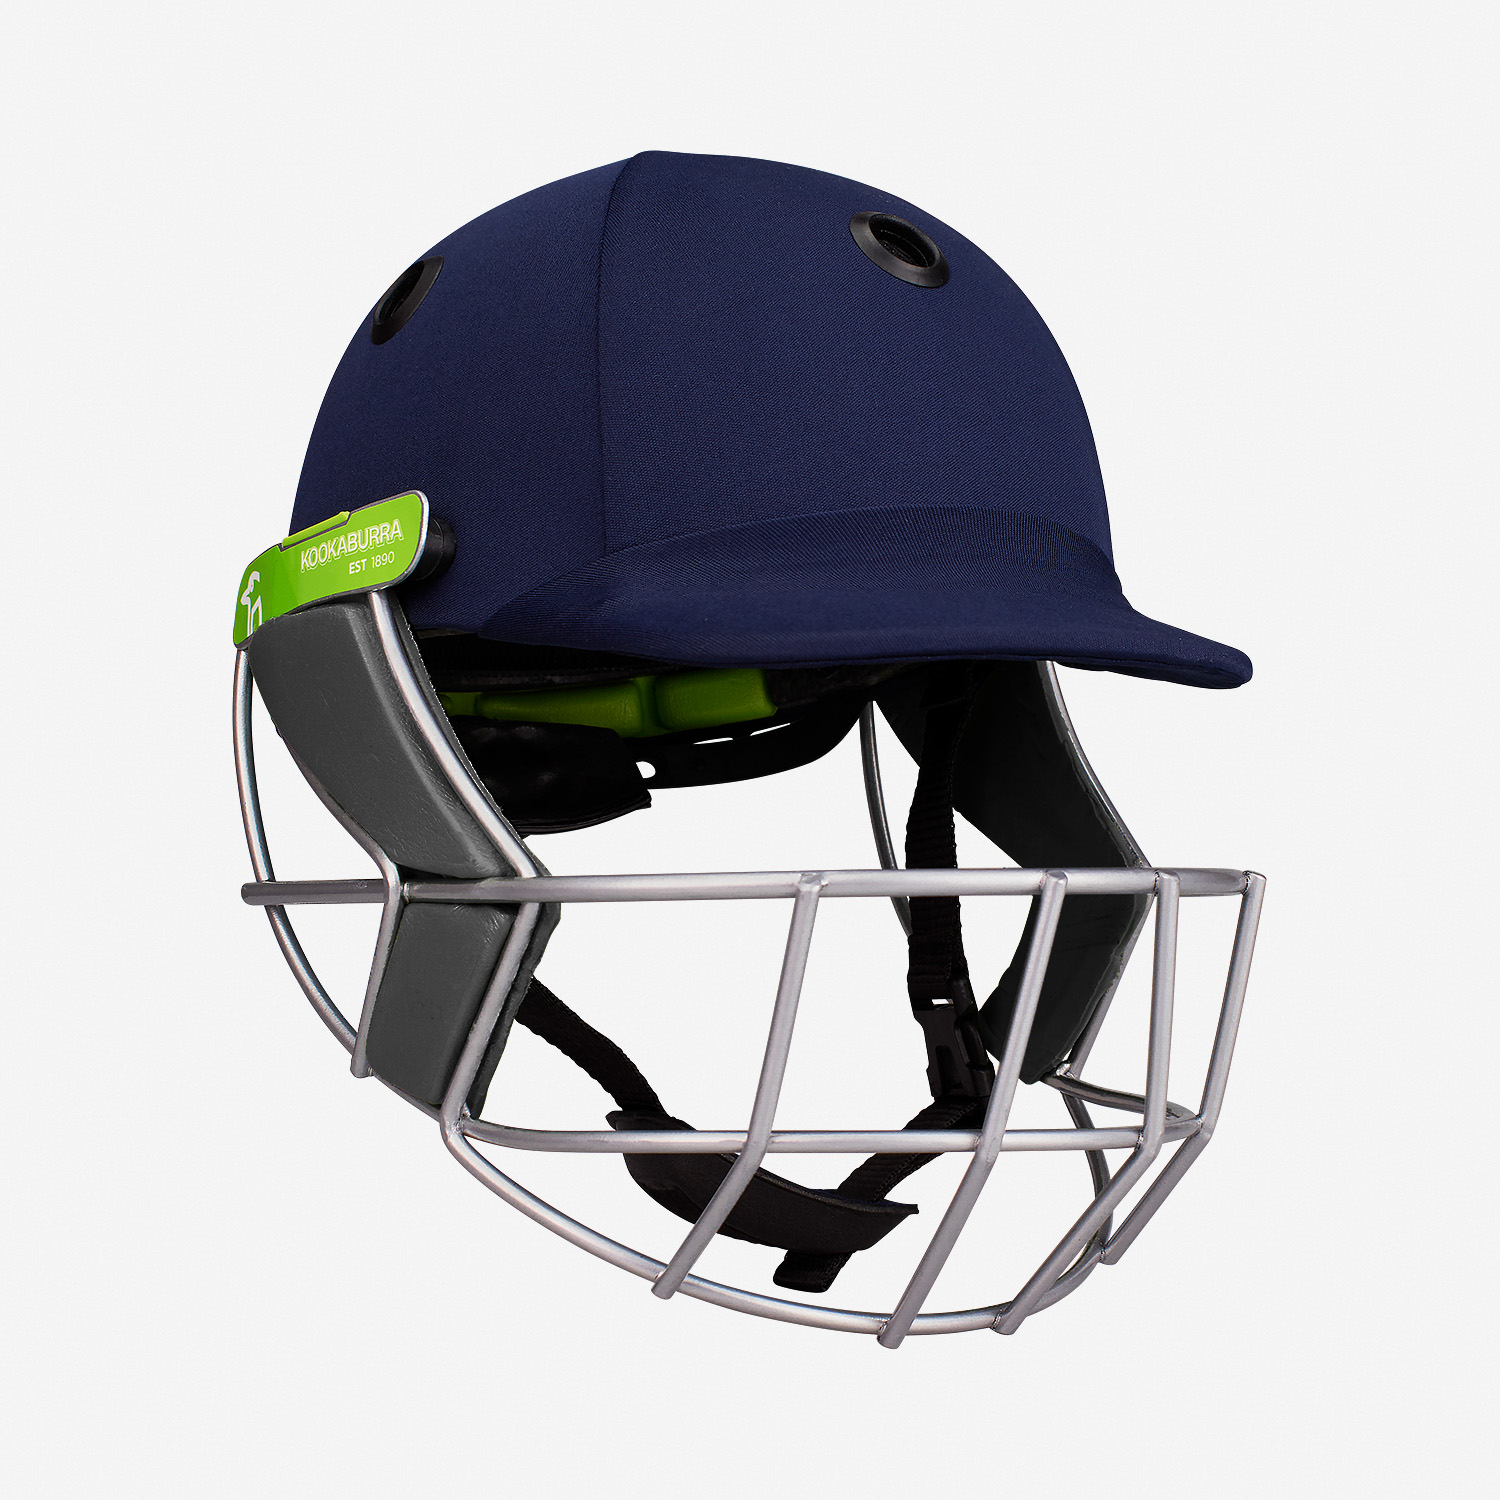 Kookaburra 1500 Cricket Helmet